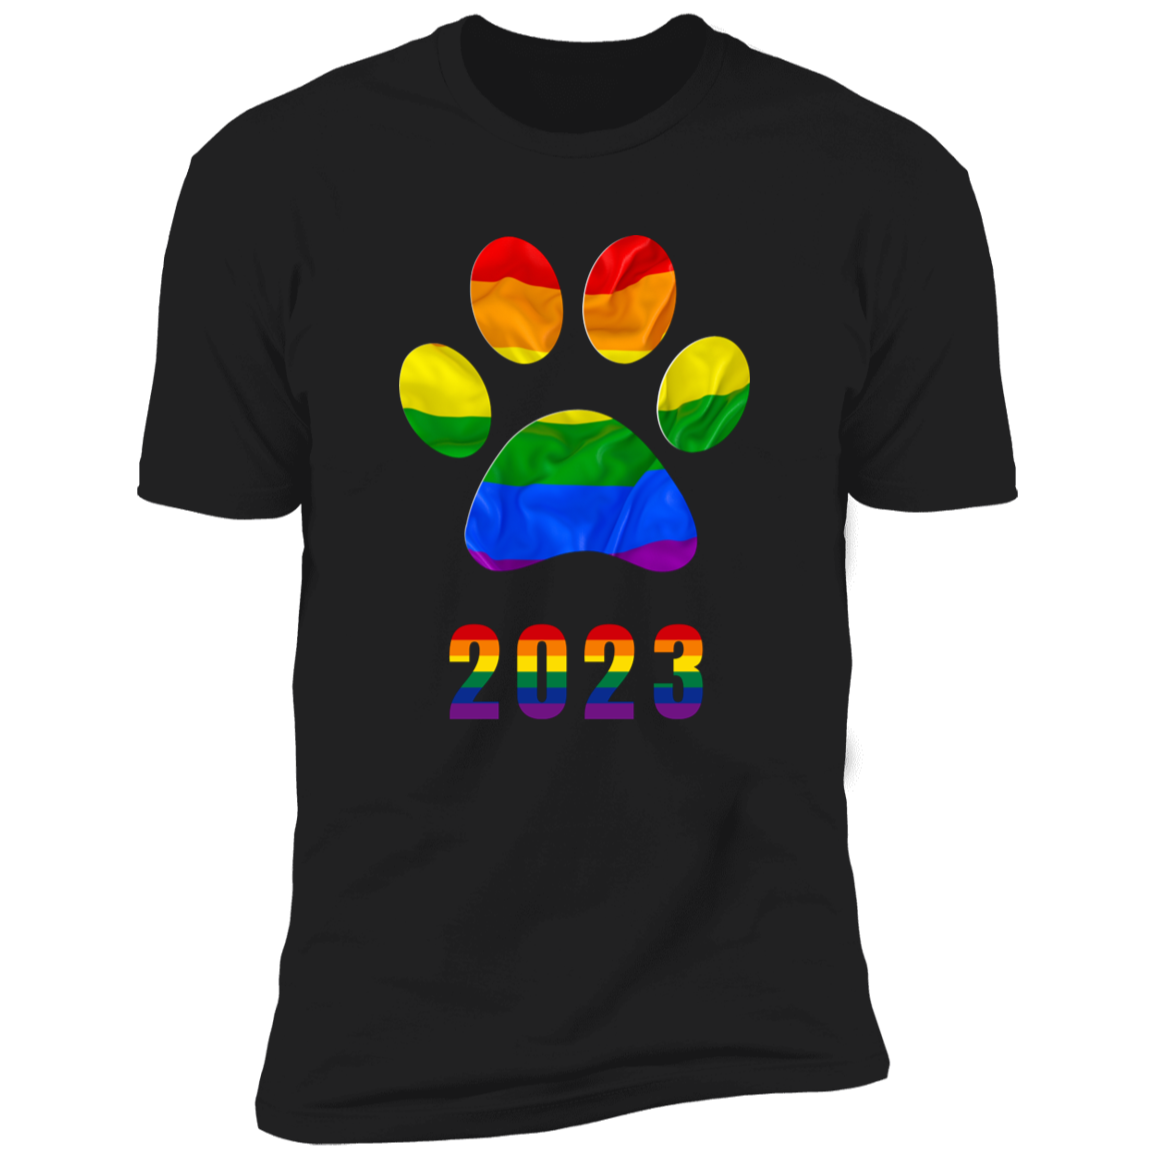 Pride Paw 2023 (Flag) Pride T-shirt, Paw Pride Dog Shirt for humans, in black